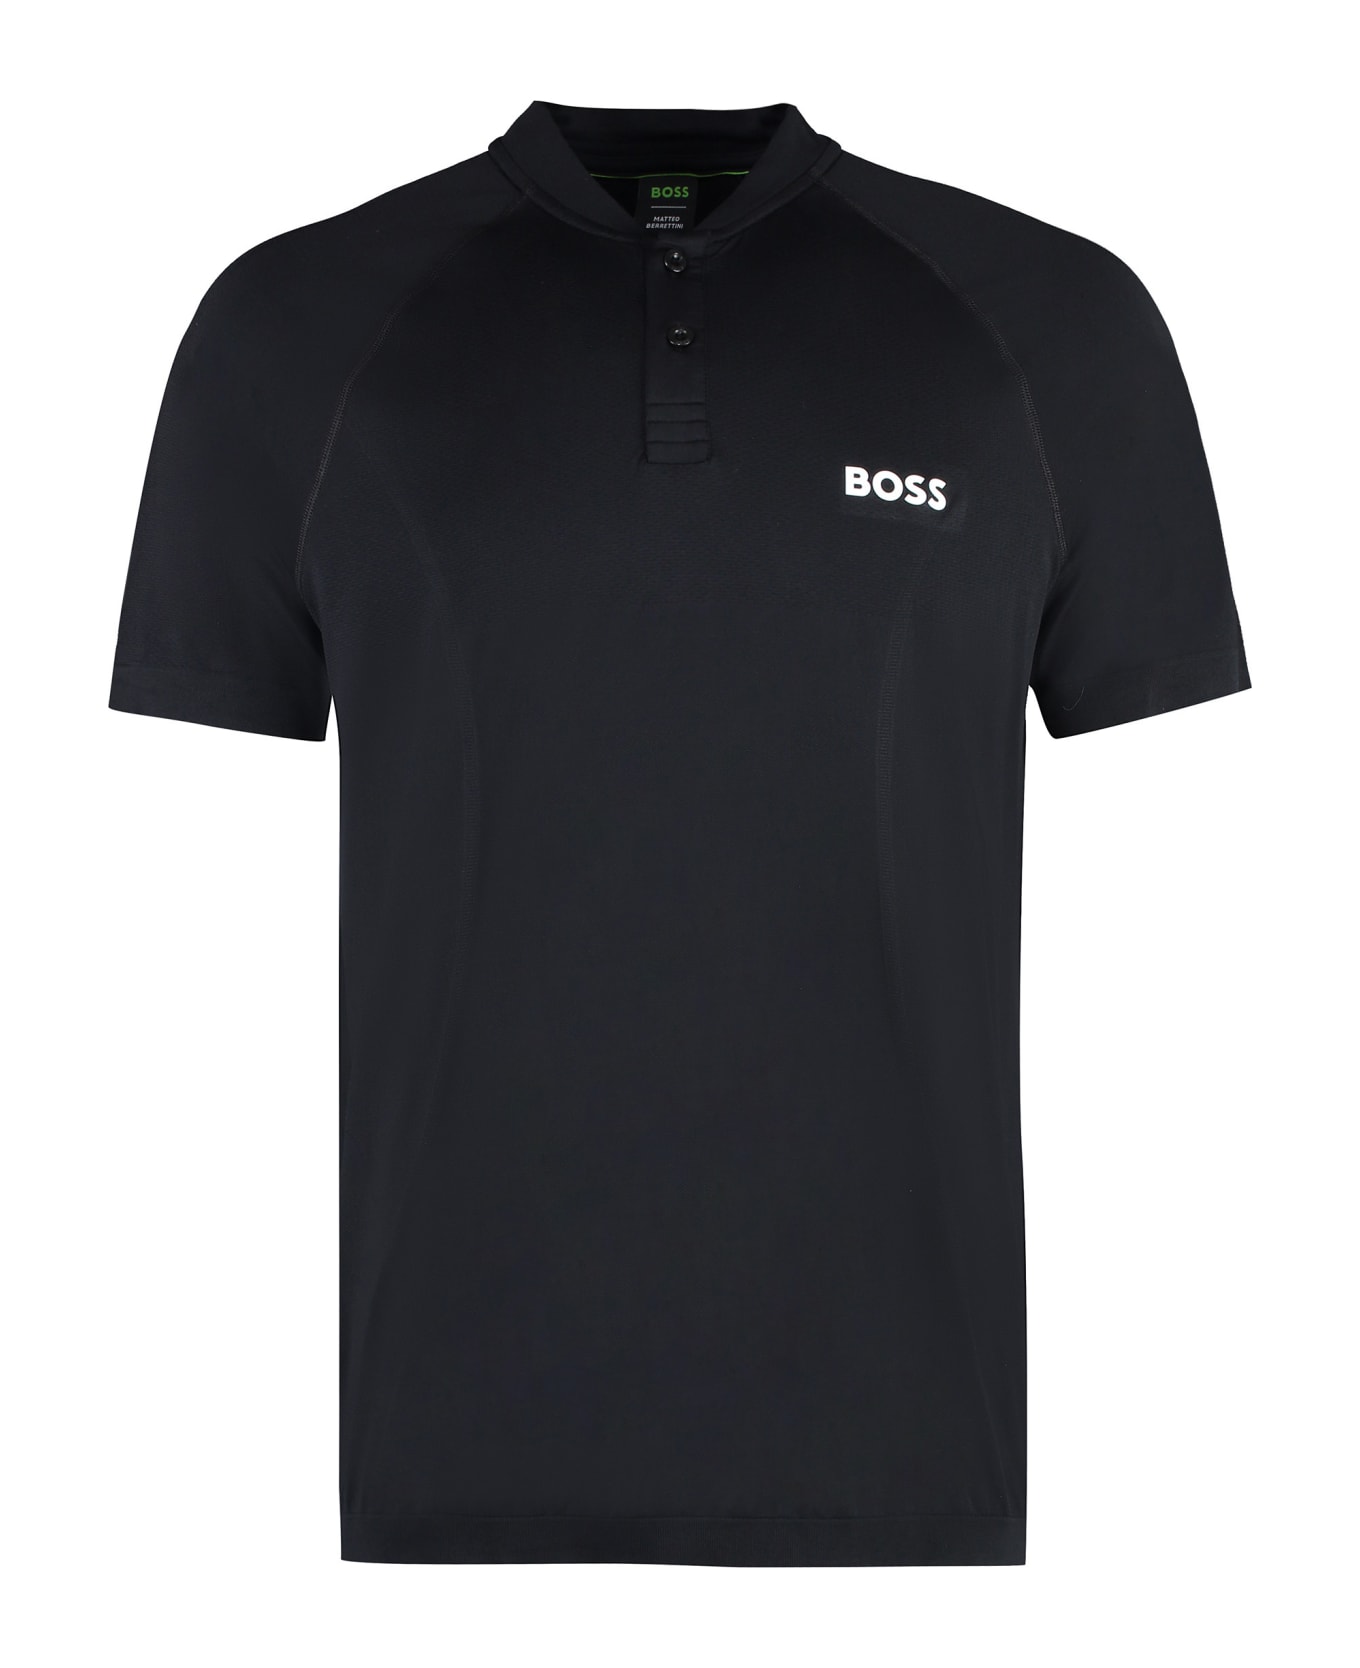 Hugo Boss Boss X Matteo Berrettini - Technical Fabric Polo Shirt - black